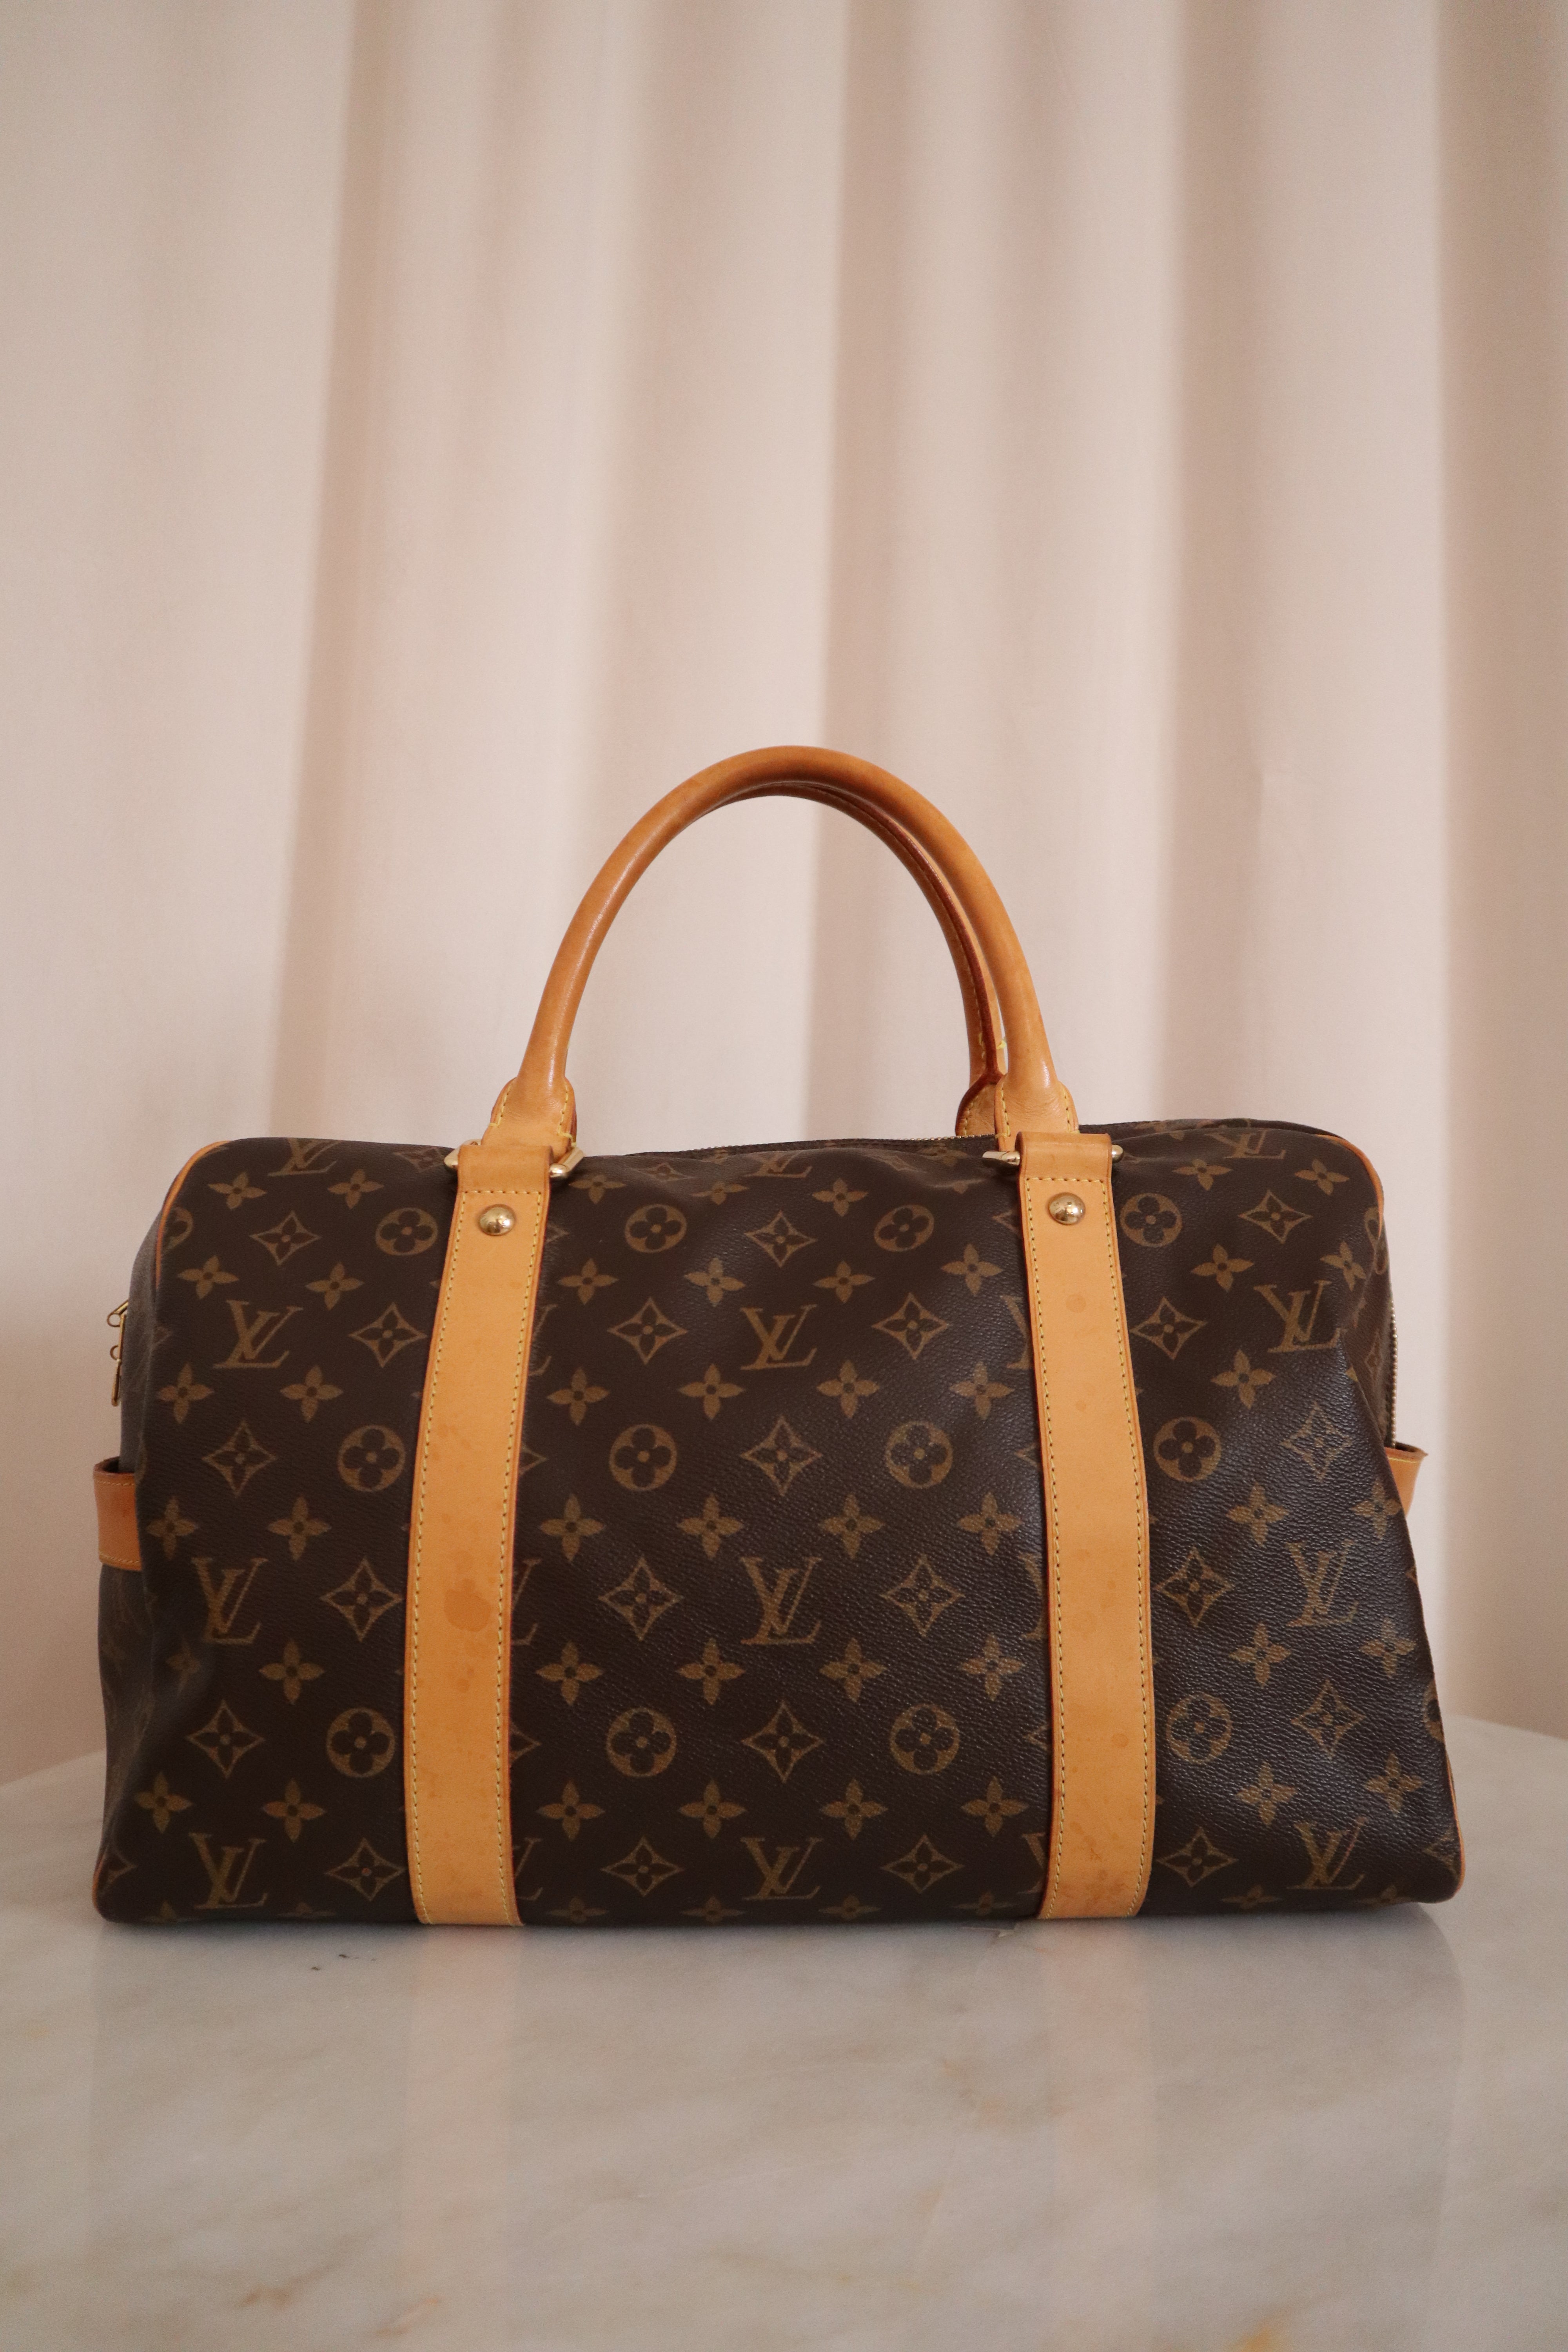 Louis Vuitton Monogram Carryall Duffle Bag